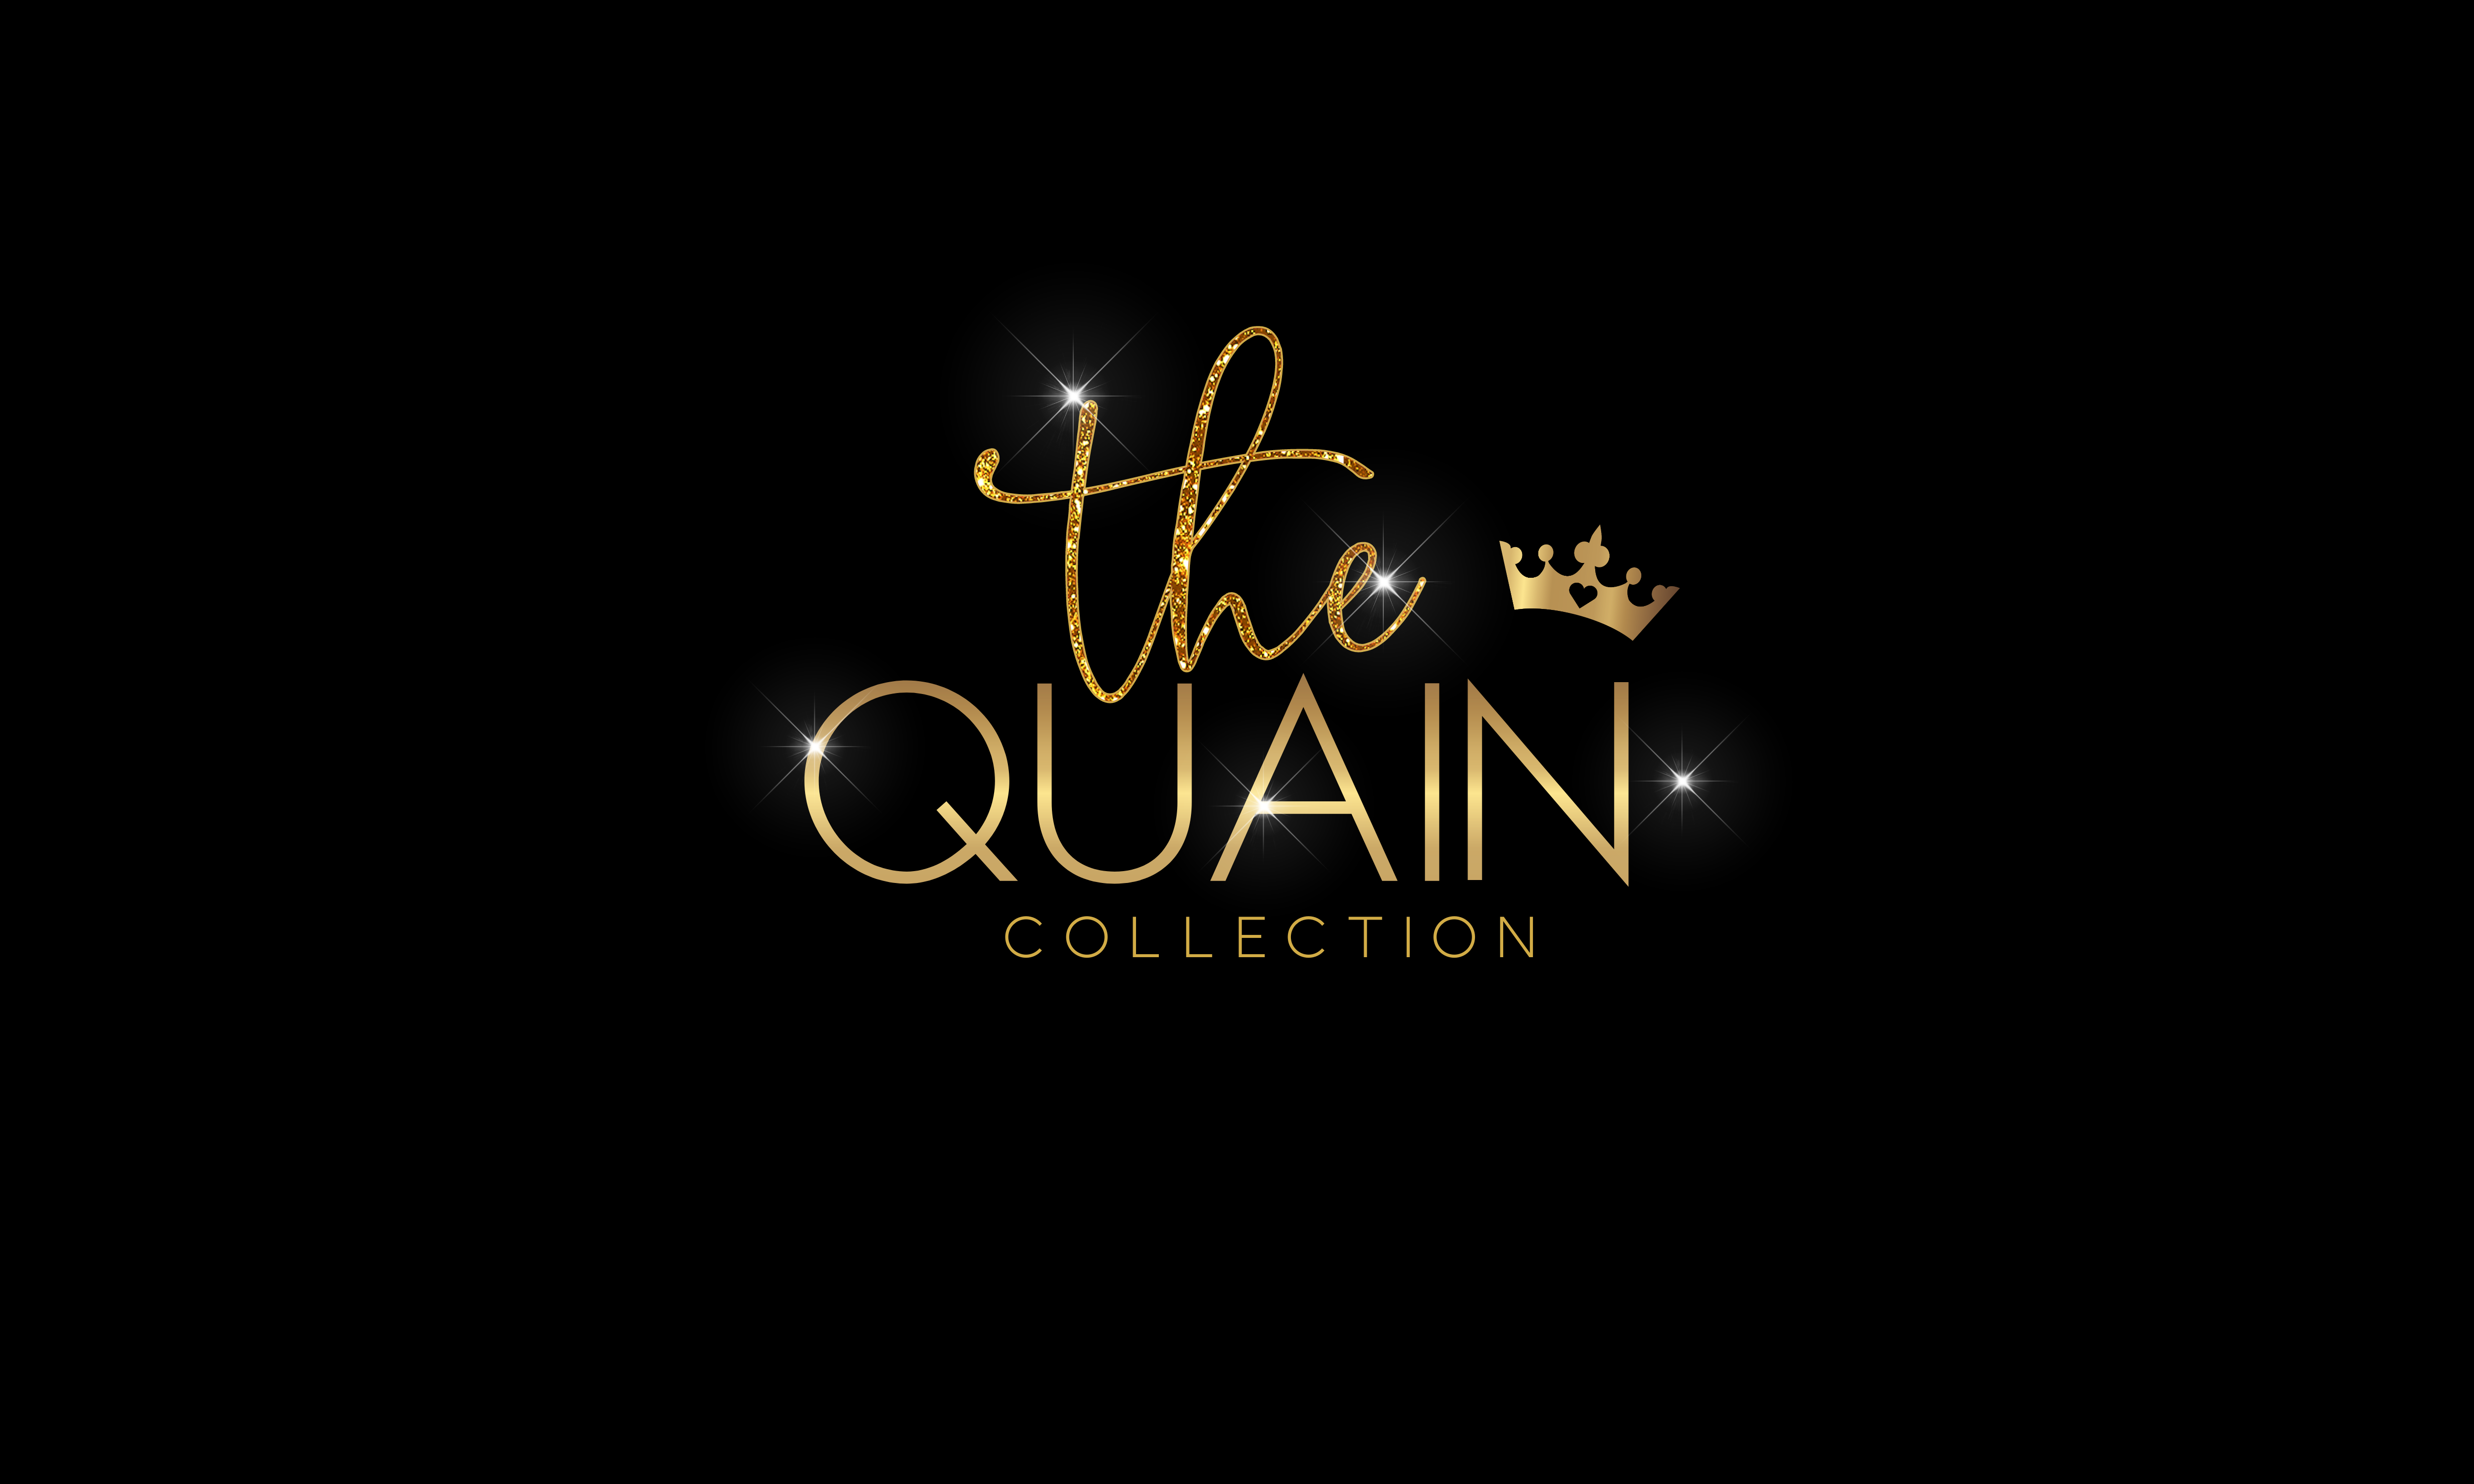 The Quain Collection